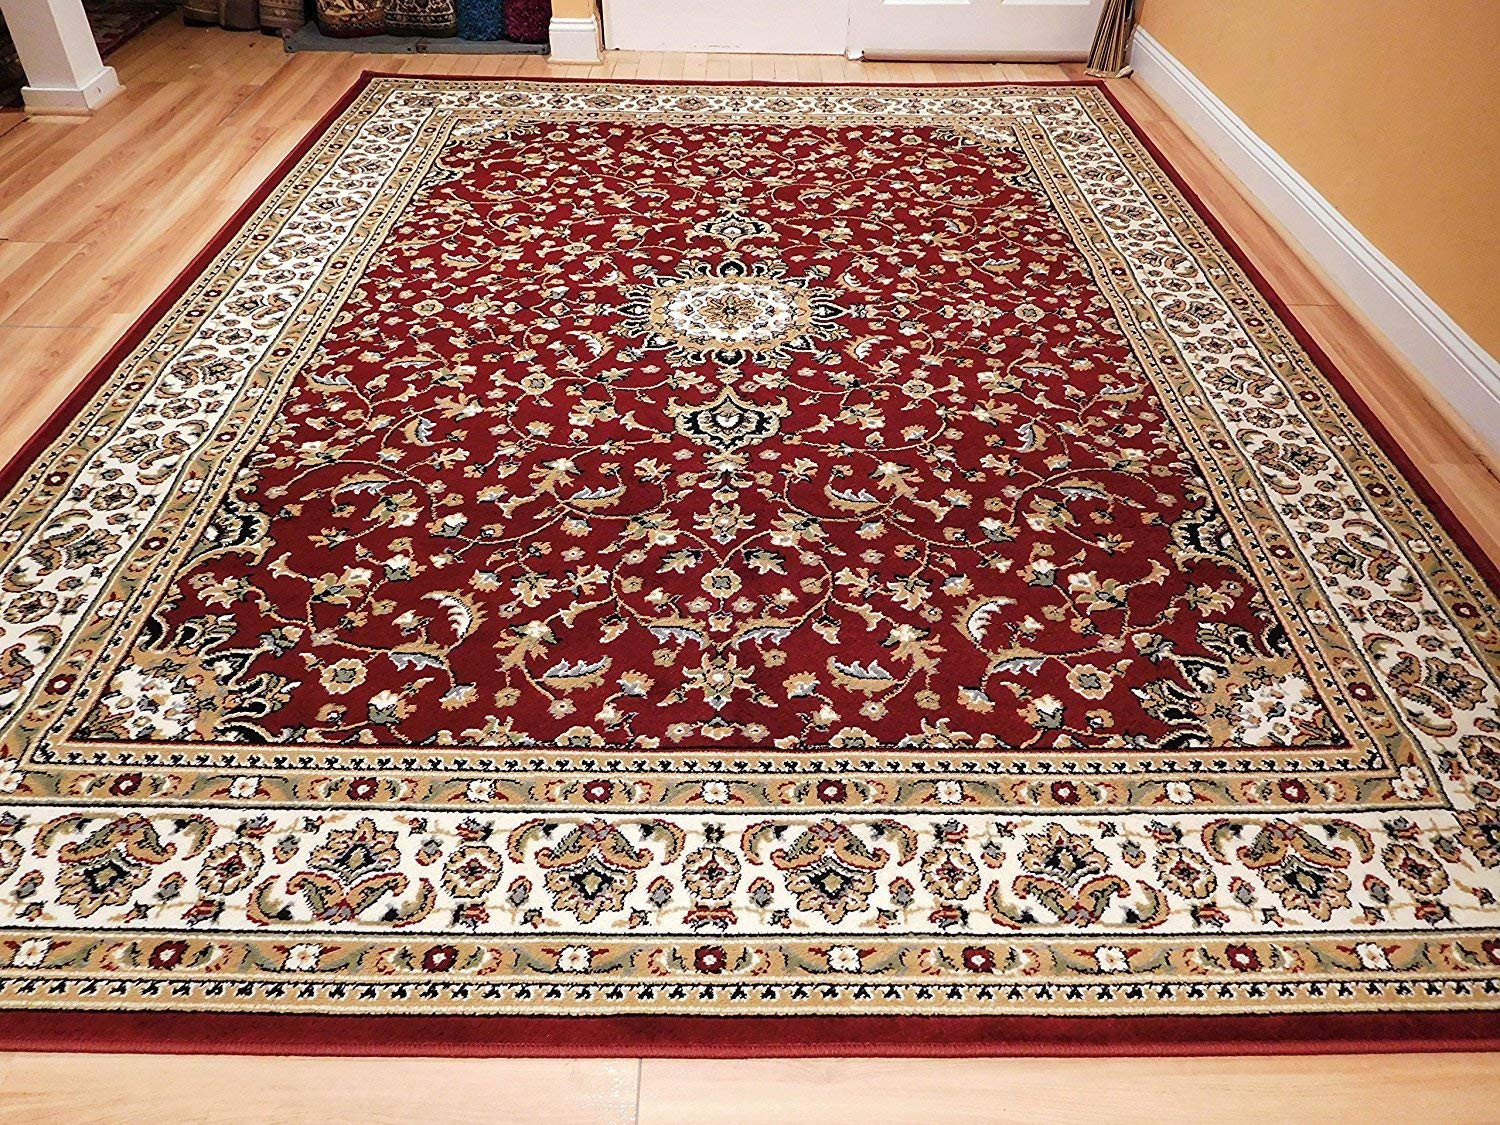 Persian area rugs amazon.com: large 5x8 red cream beige black isfahan area rug oriental  carpet ITBESTV